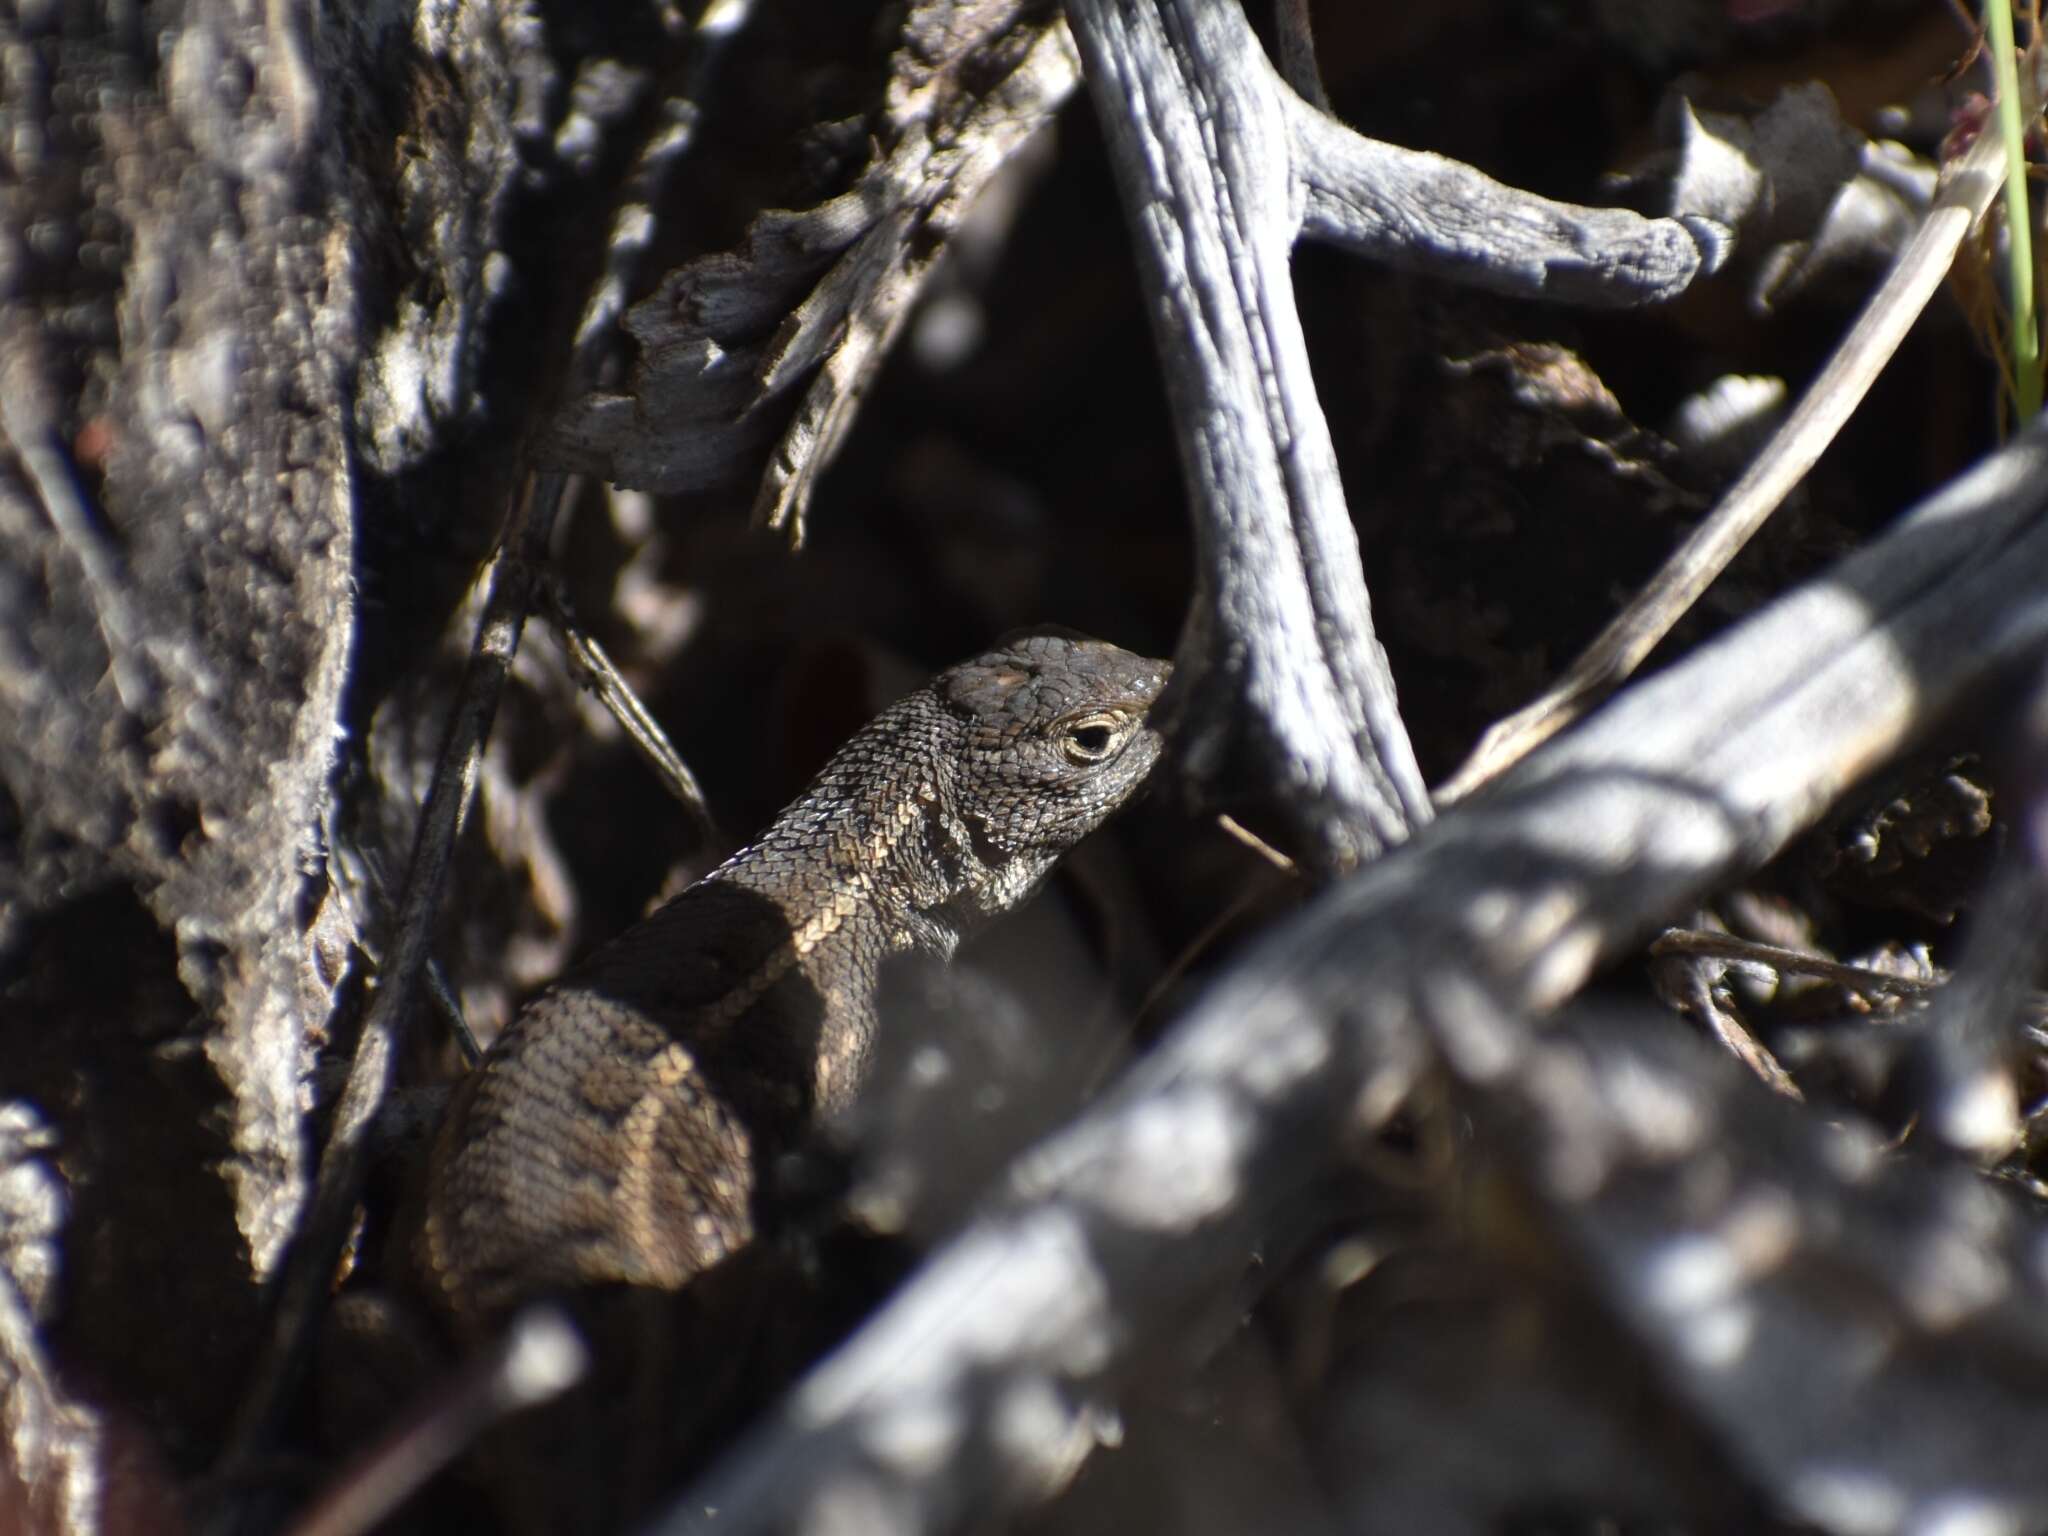 Image of Coleman's Bunchgrass Lizard